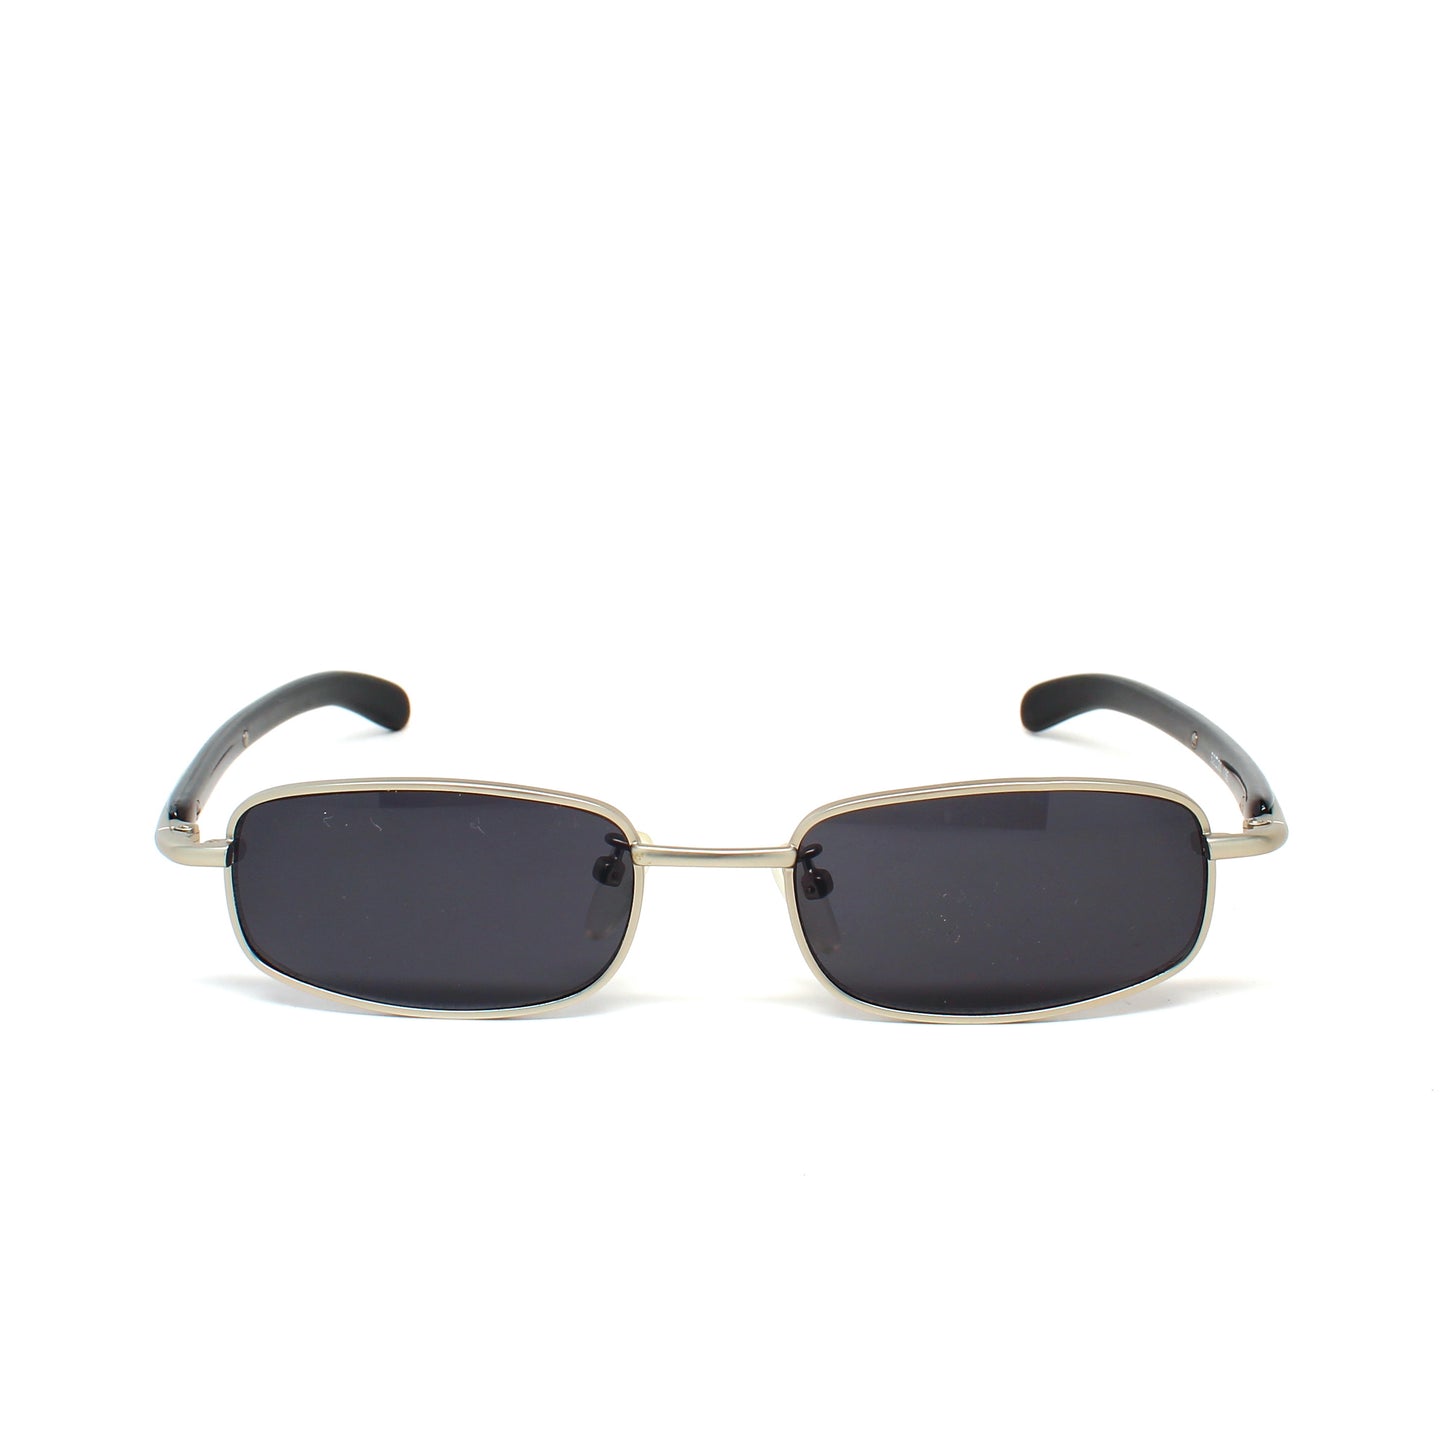 Vintage Small Size 1996 Wraparound Rectangle Roxbury Sunglasses - Silver